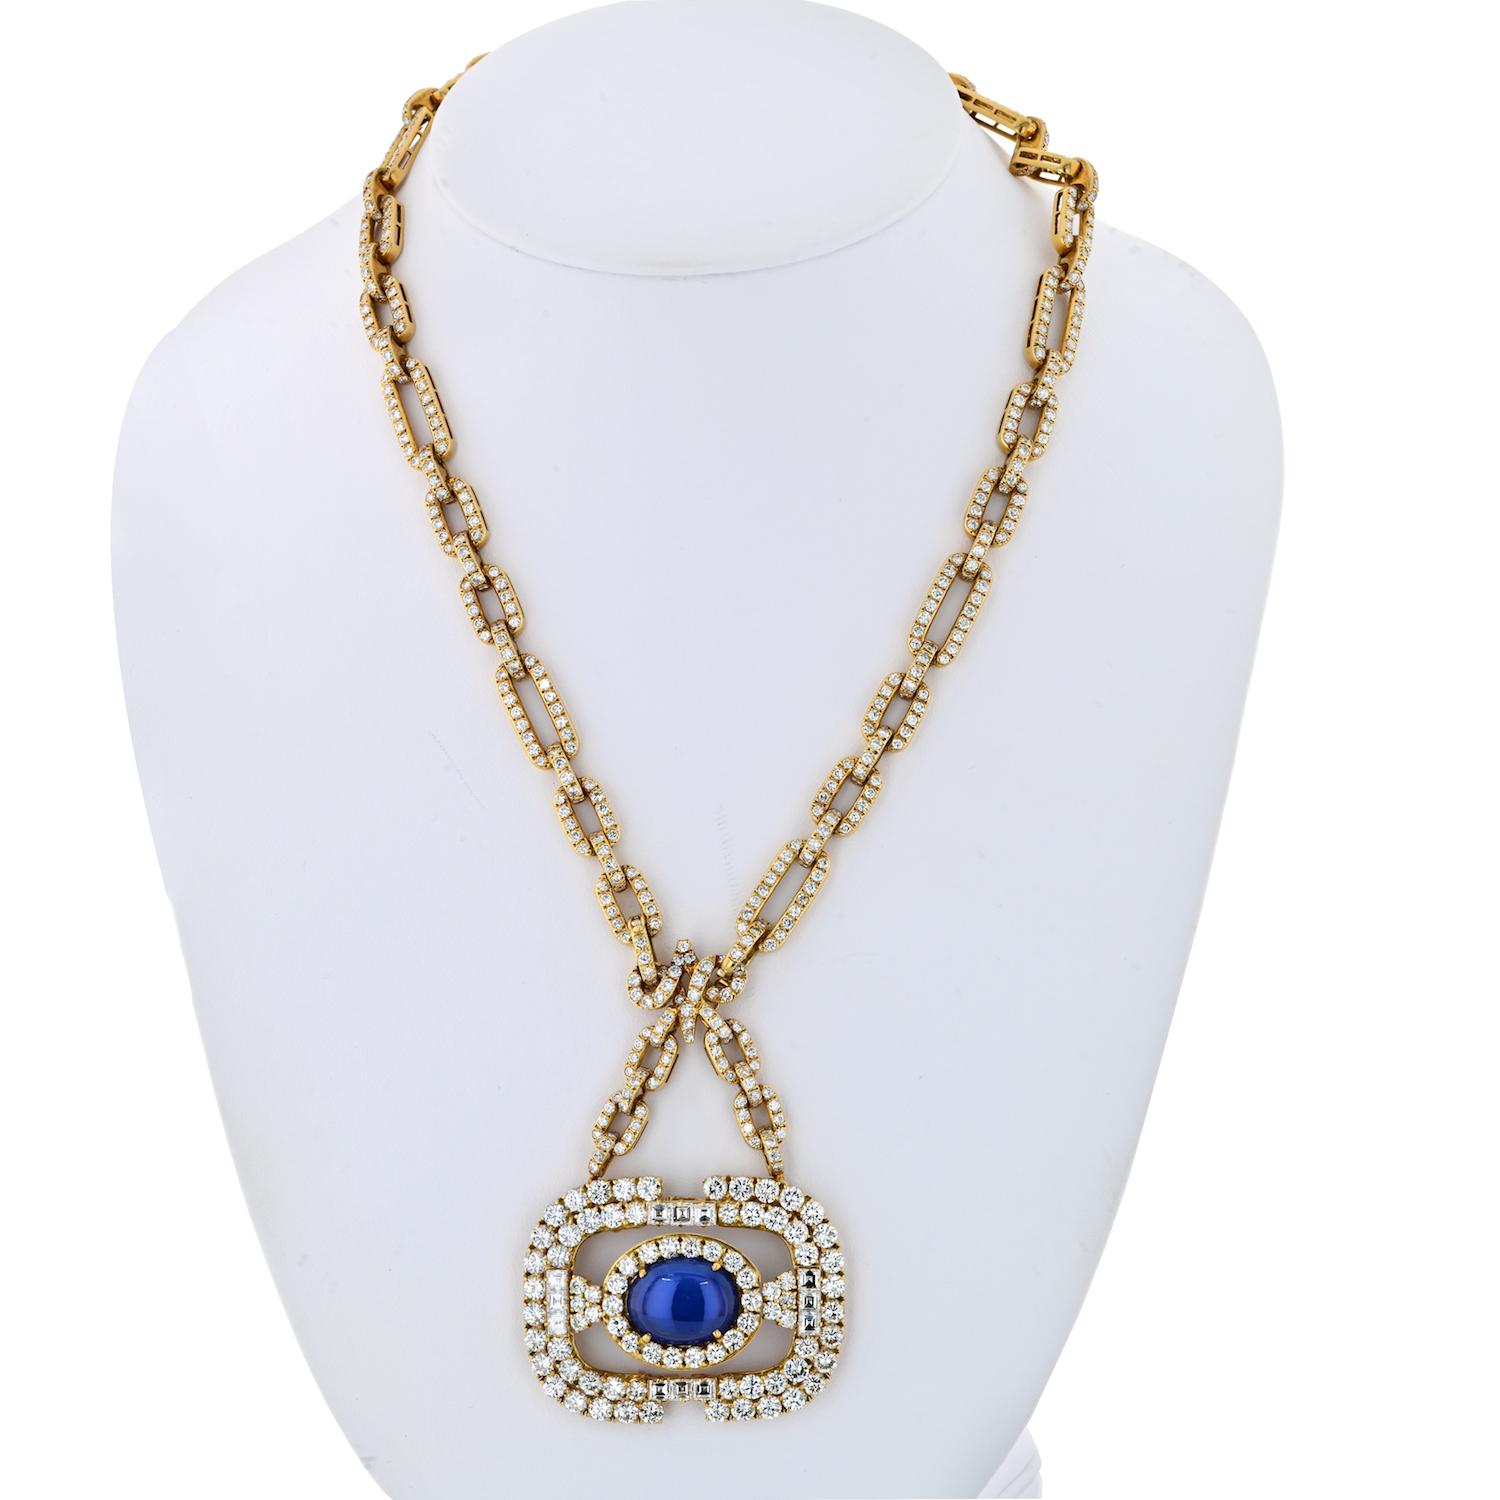 Diamond necklace with detachable sapphire pendant. 
Circa 1970's.
Cabochon blue sapphire: 18cts
Diamonds: 36cttw
Chain Length: 18 inches
Pendant Length: 2.5 inches
Sapphire Dimentions: 18.2mm x 14mm 